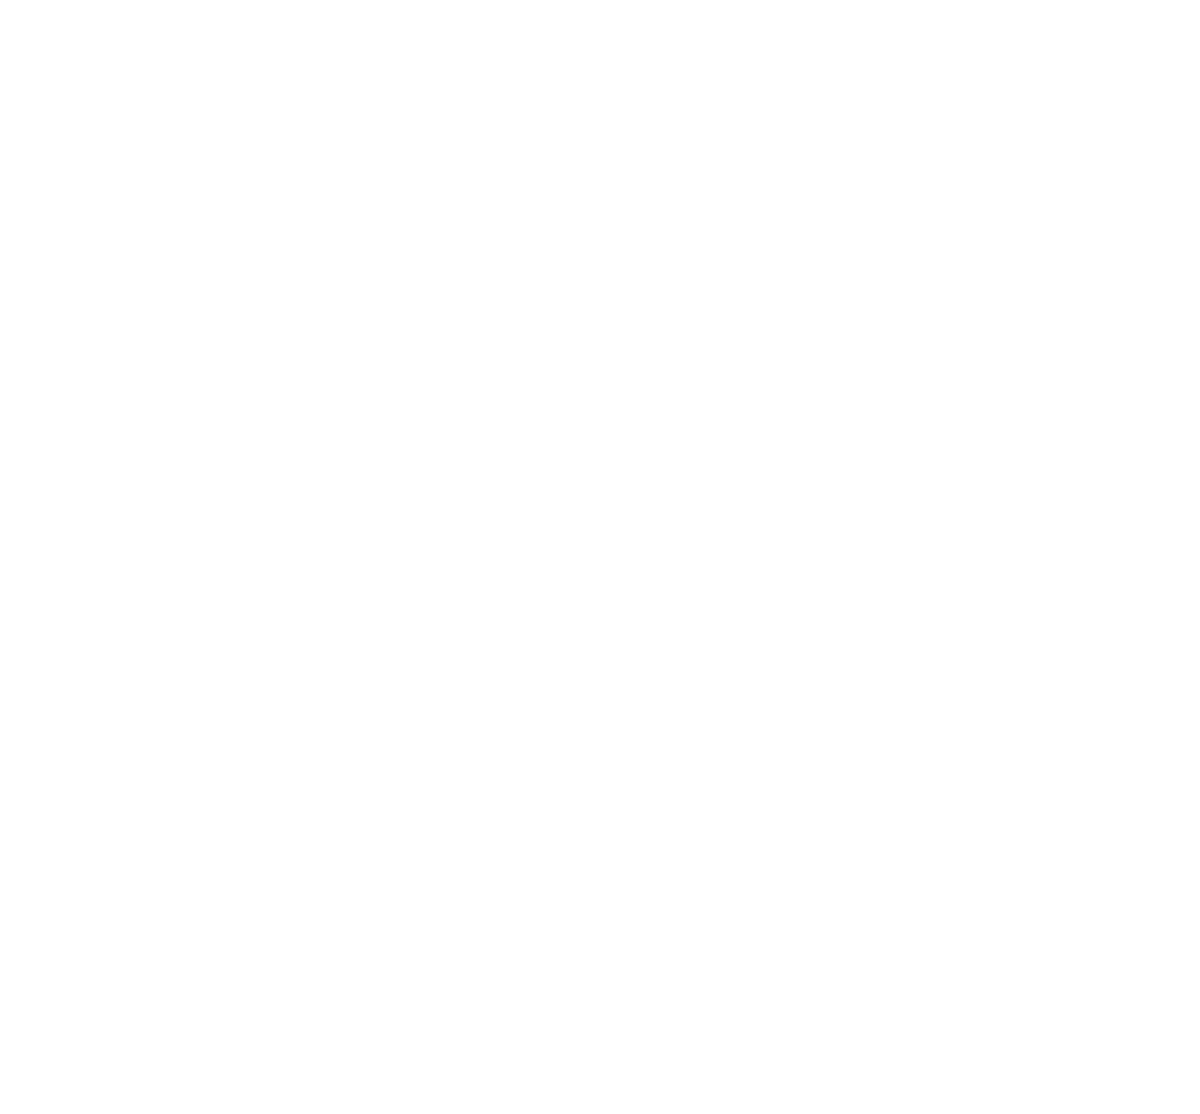 Crossrail logo